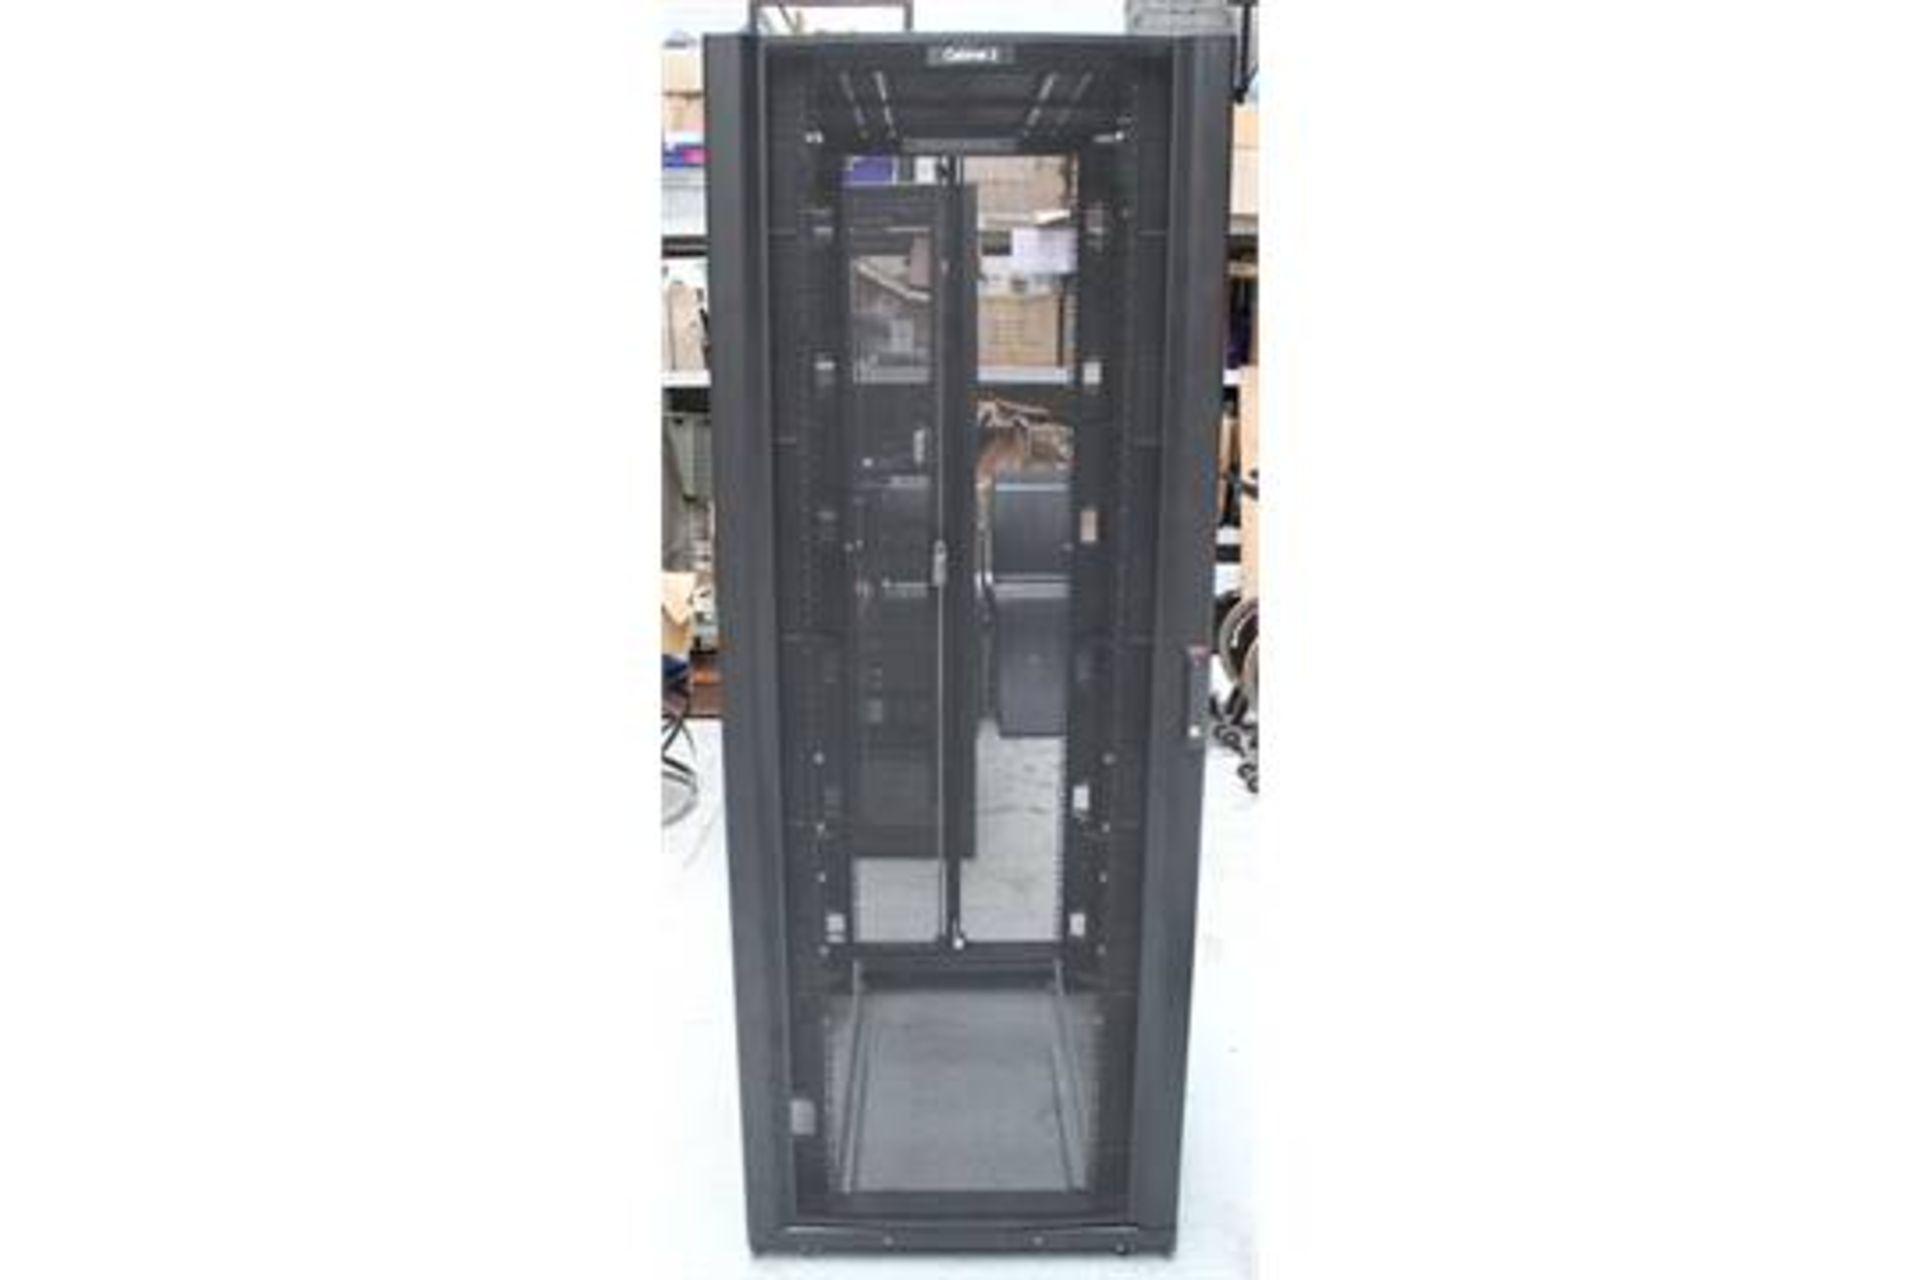 1 x APC Netshelter 42U Server Enclosure - AR3100 Black - Suitable For 19 Inch Compliant - Image 4 of 4